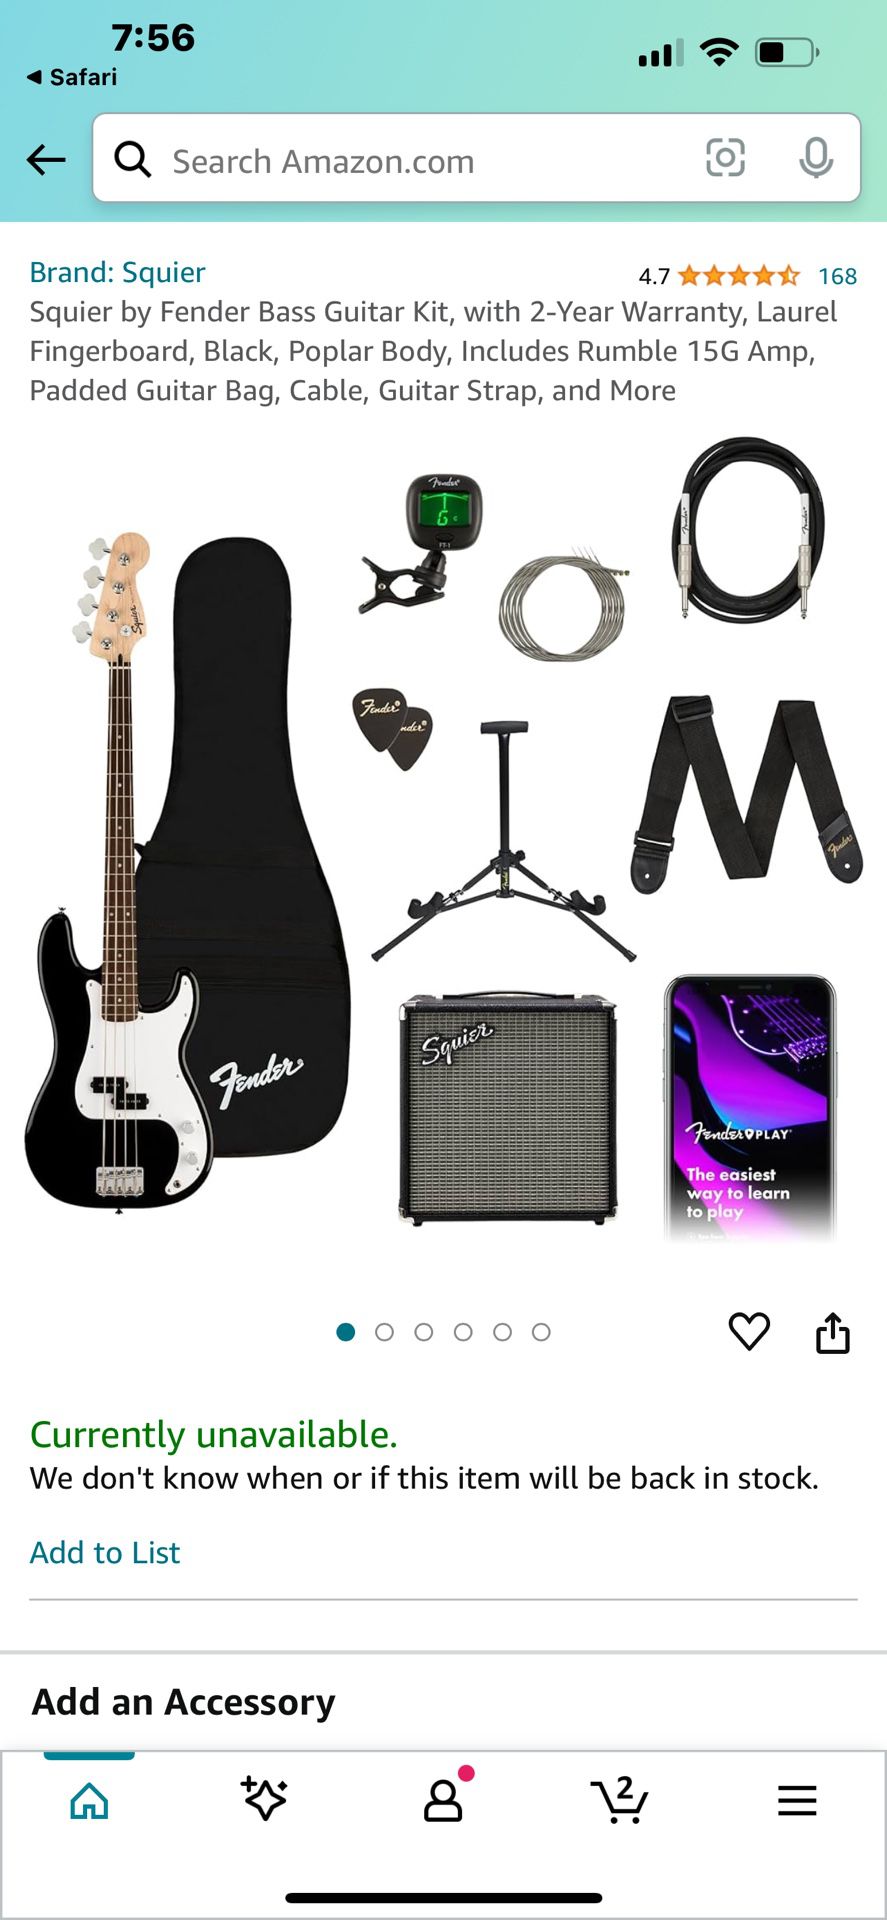 Squier by Fender Bass Guitar Kit, Laurel Fingerboard, Black, Poplar Body